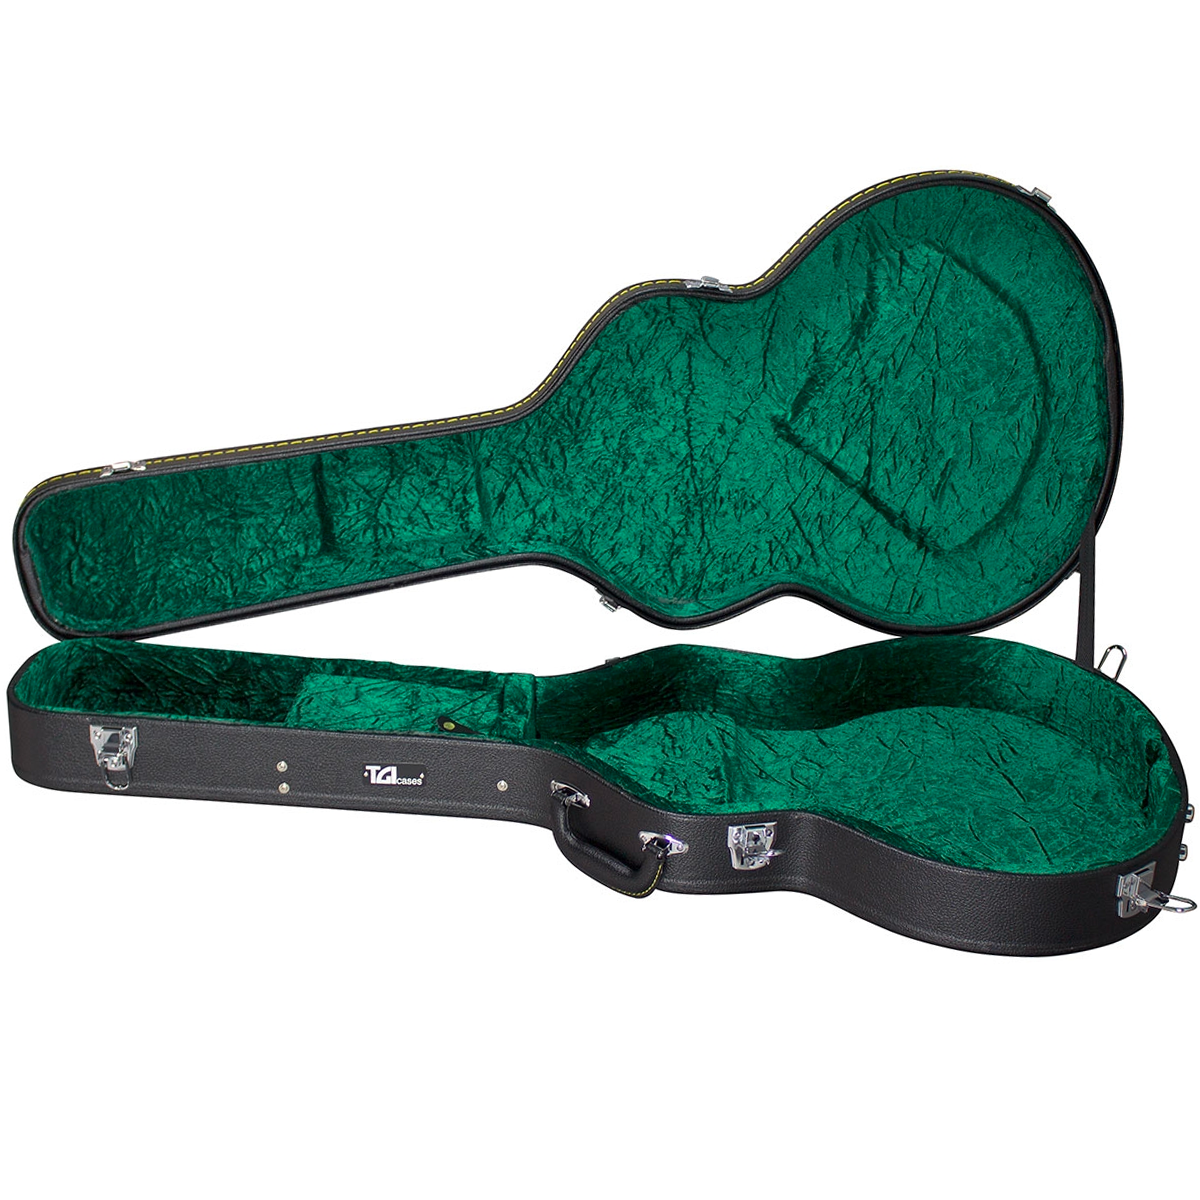 TGI Semi Acoustic Guitar Hard Case - Fits Gibson 335 Guitars